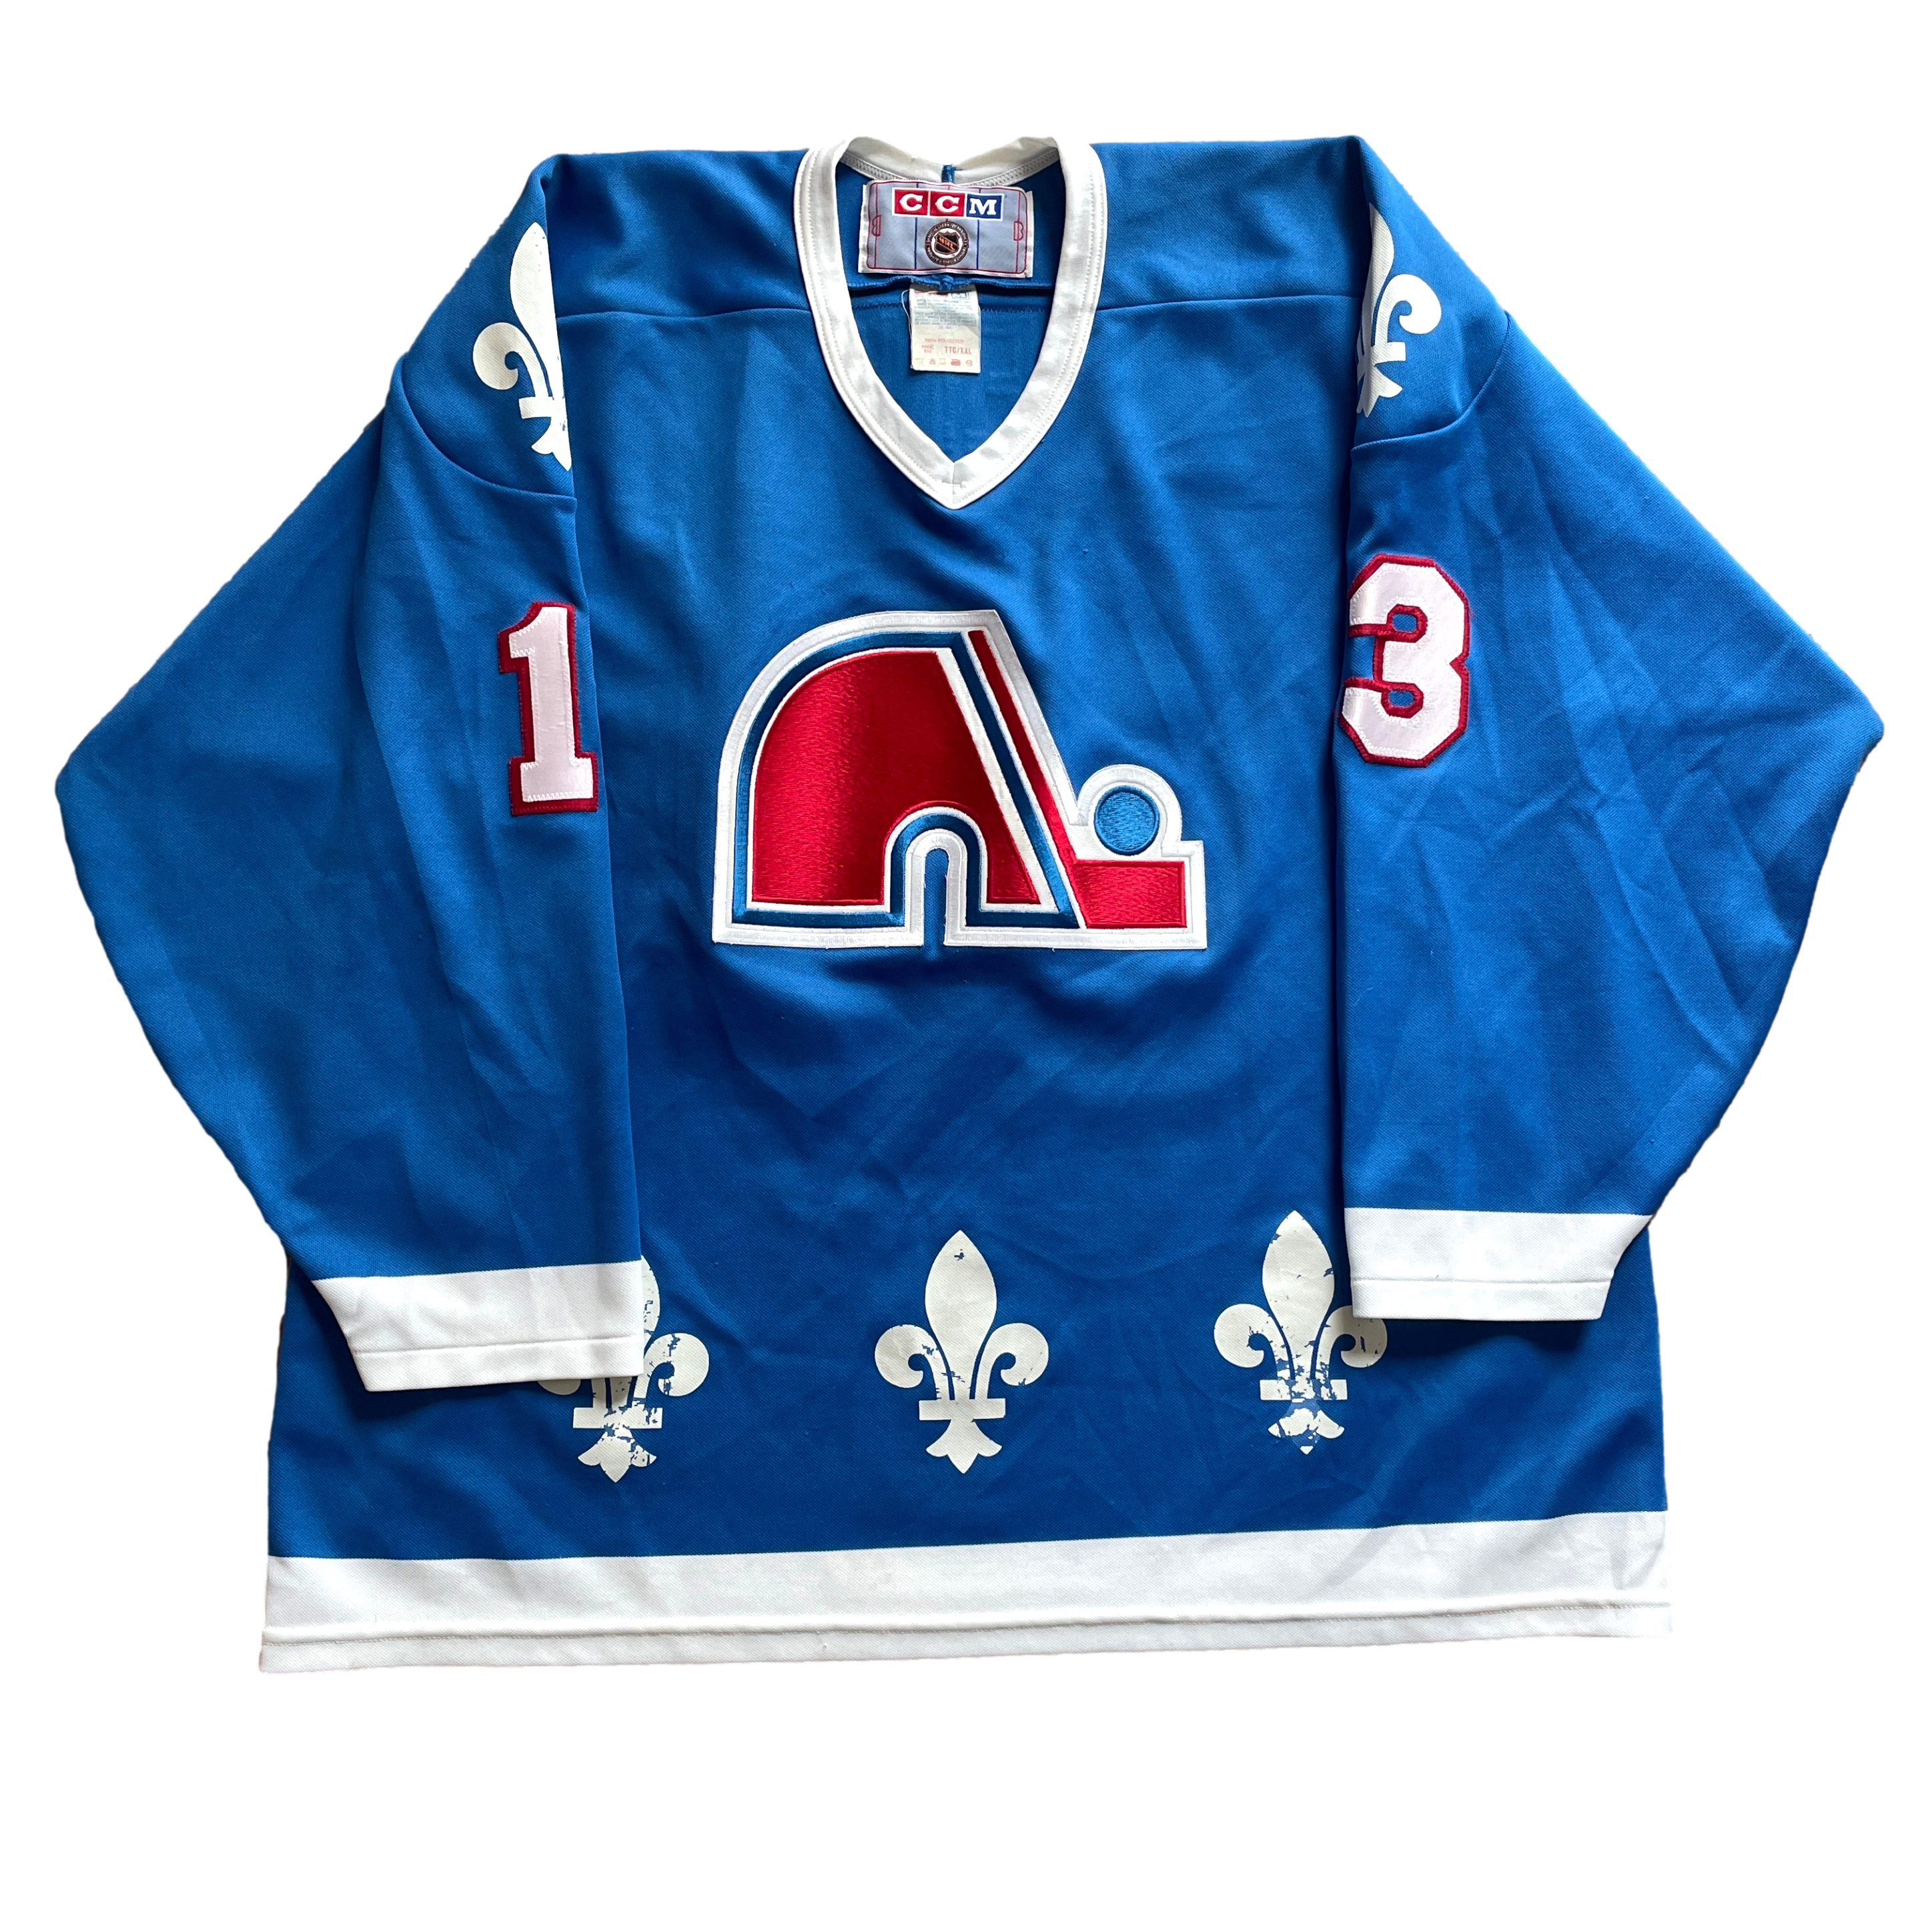 Vintage Quebec Nordiques NHL Hockey Jersey (XXL)